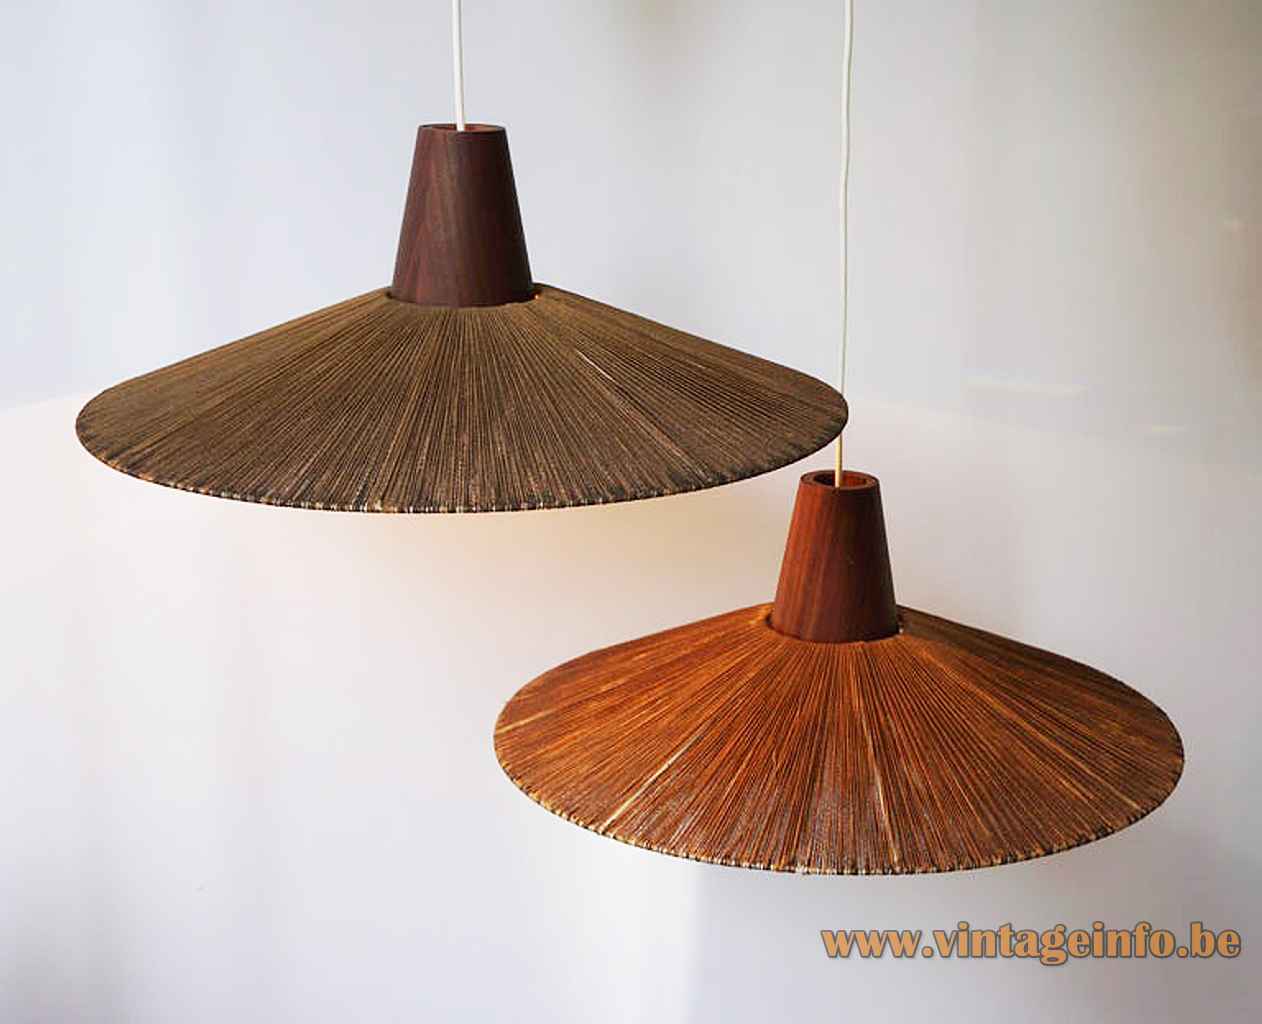 Temde sisal pendant lamp round conical cord braid lampshade teak wood cone 1950s 1960s Germany Switzerland